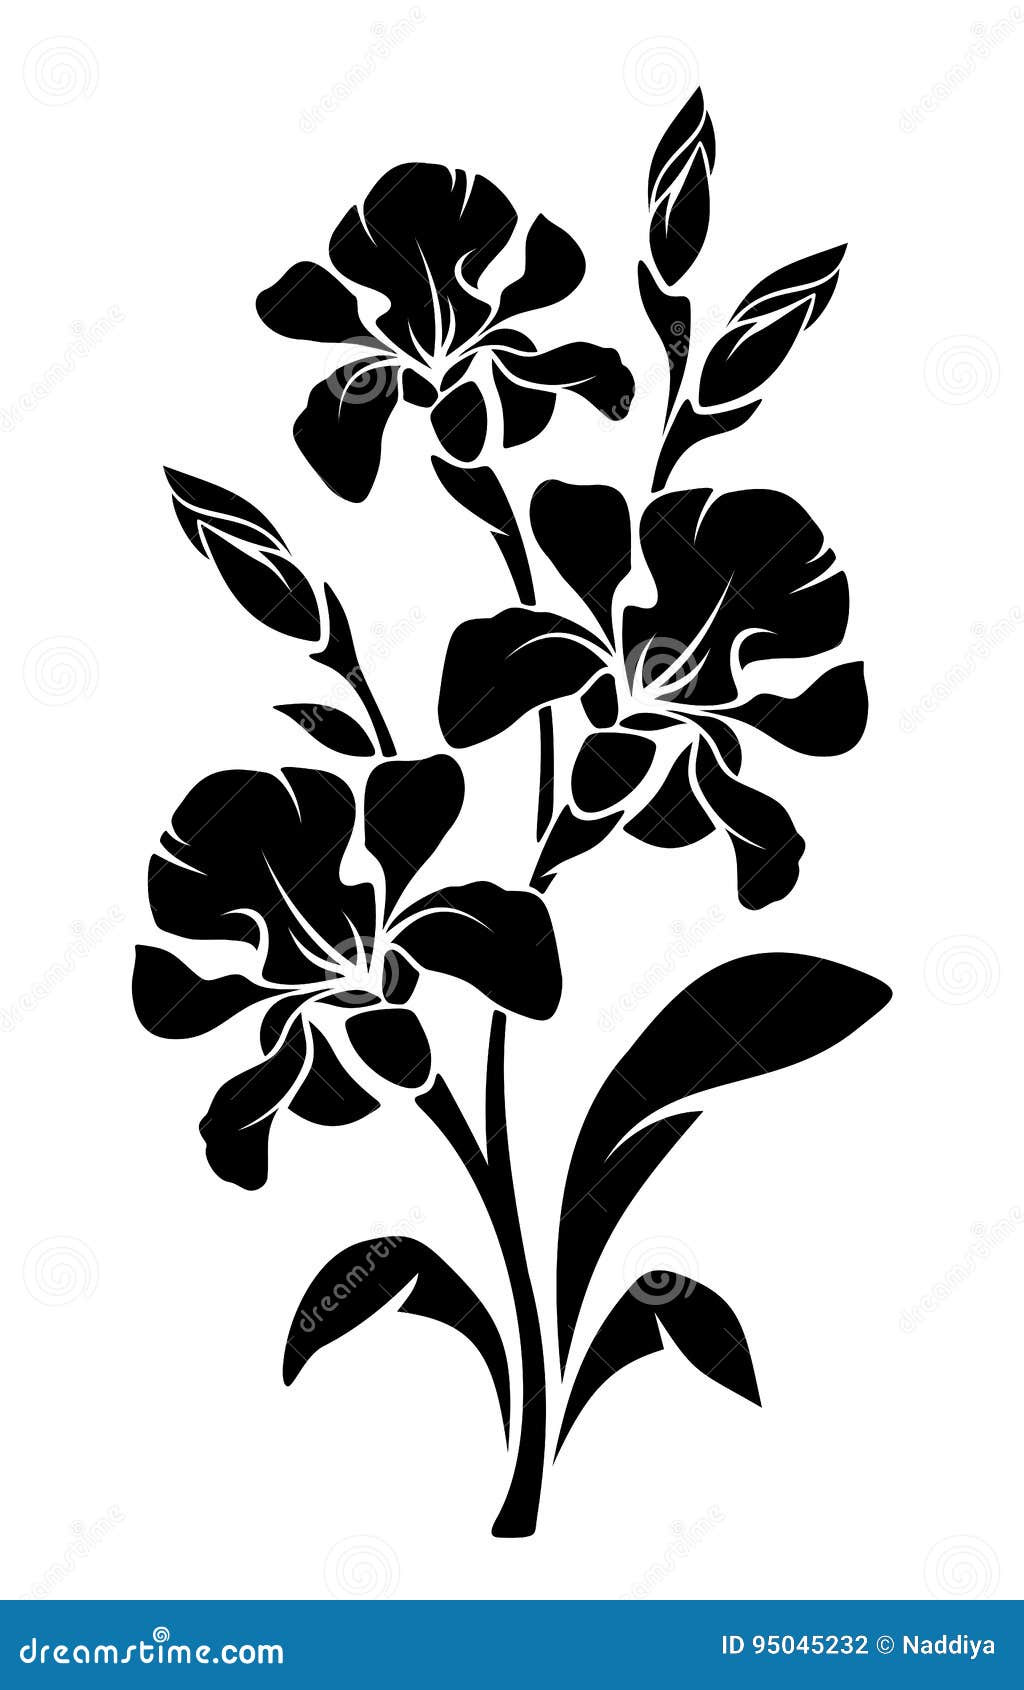 Black Silhouette Of Iris Flowers. Vector Illustration. Stock Vector